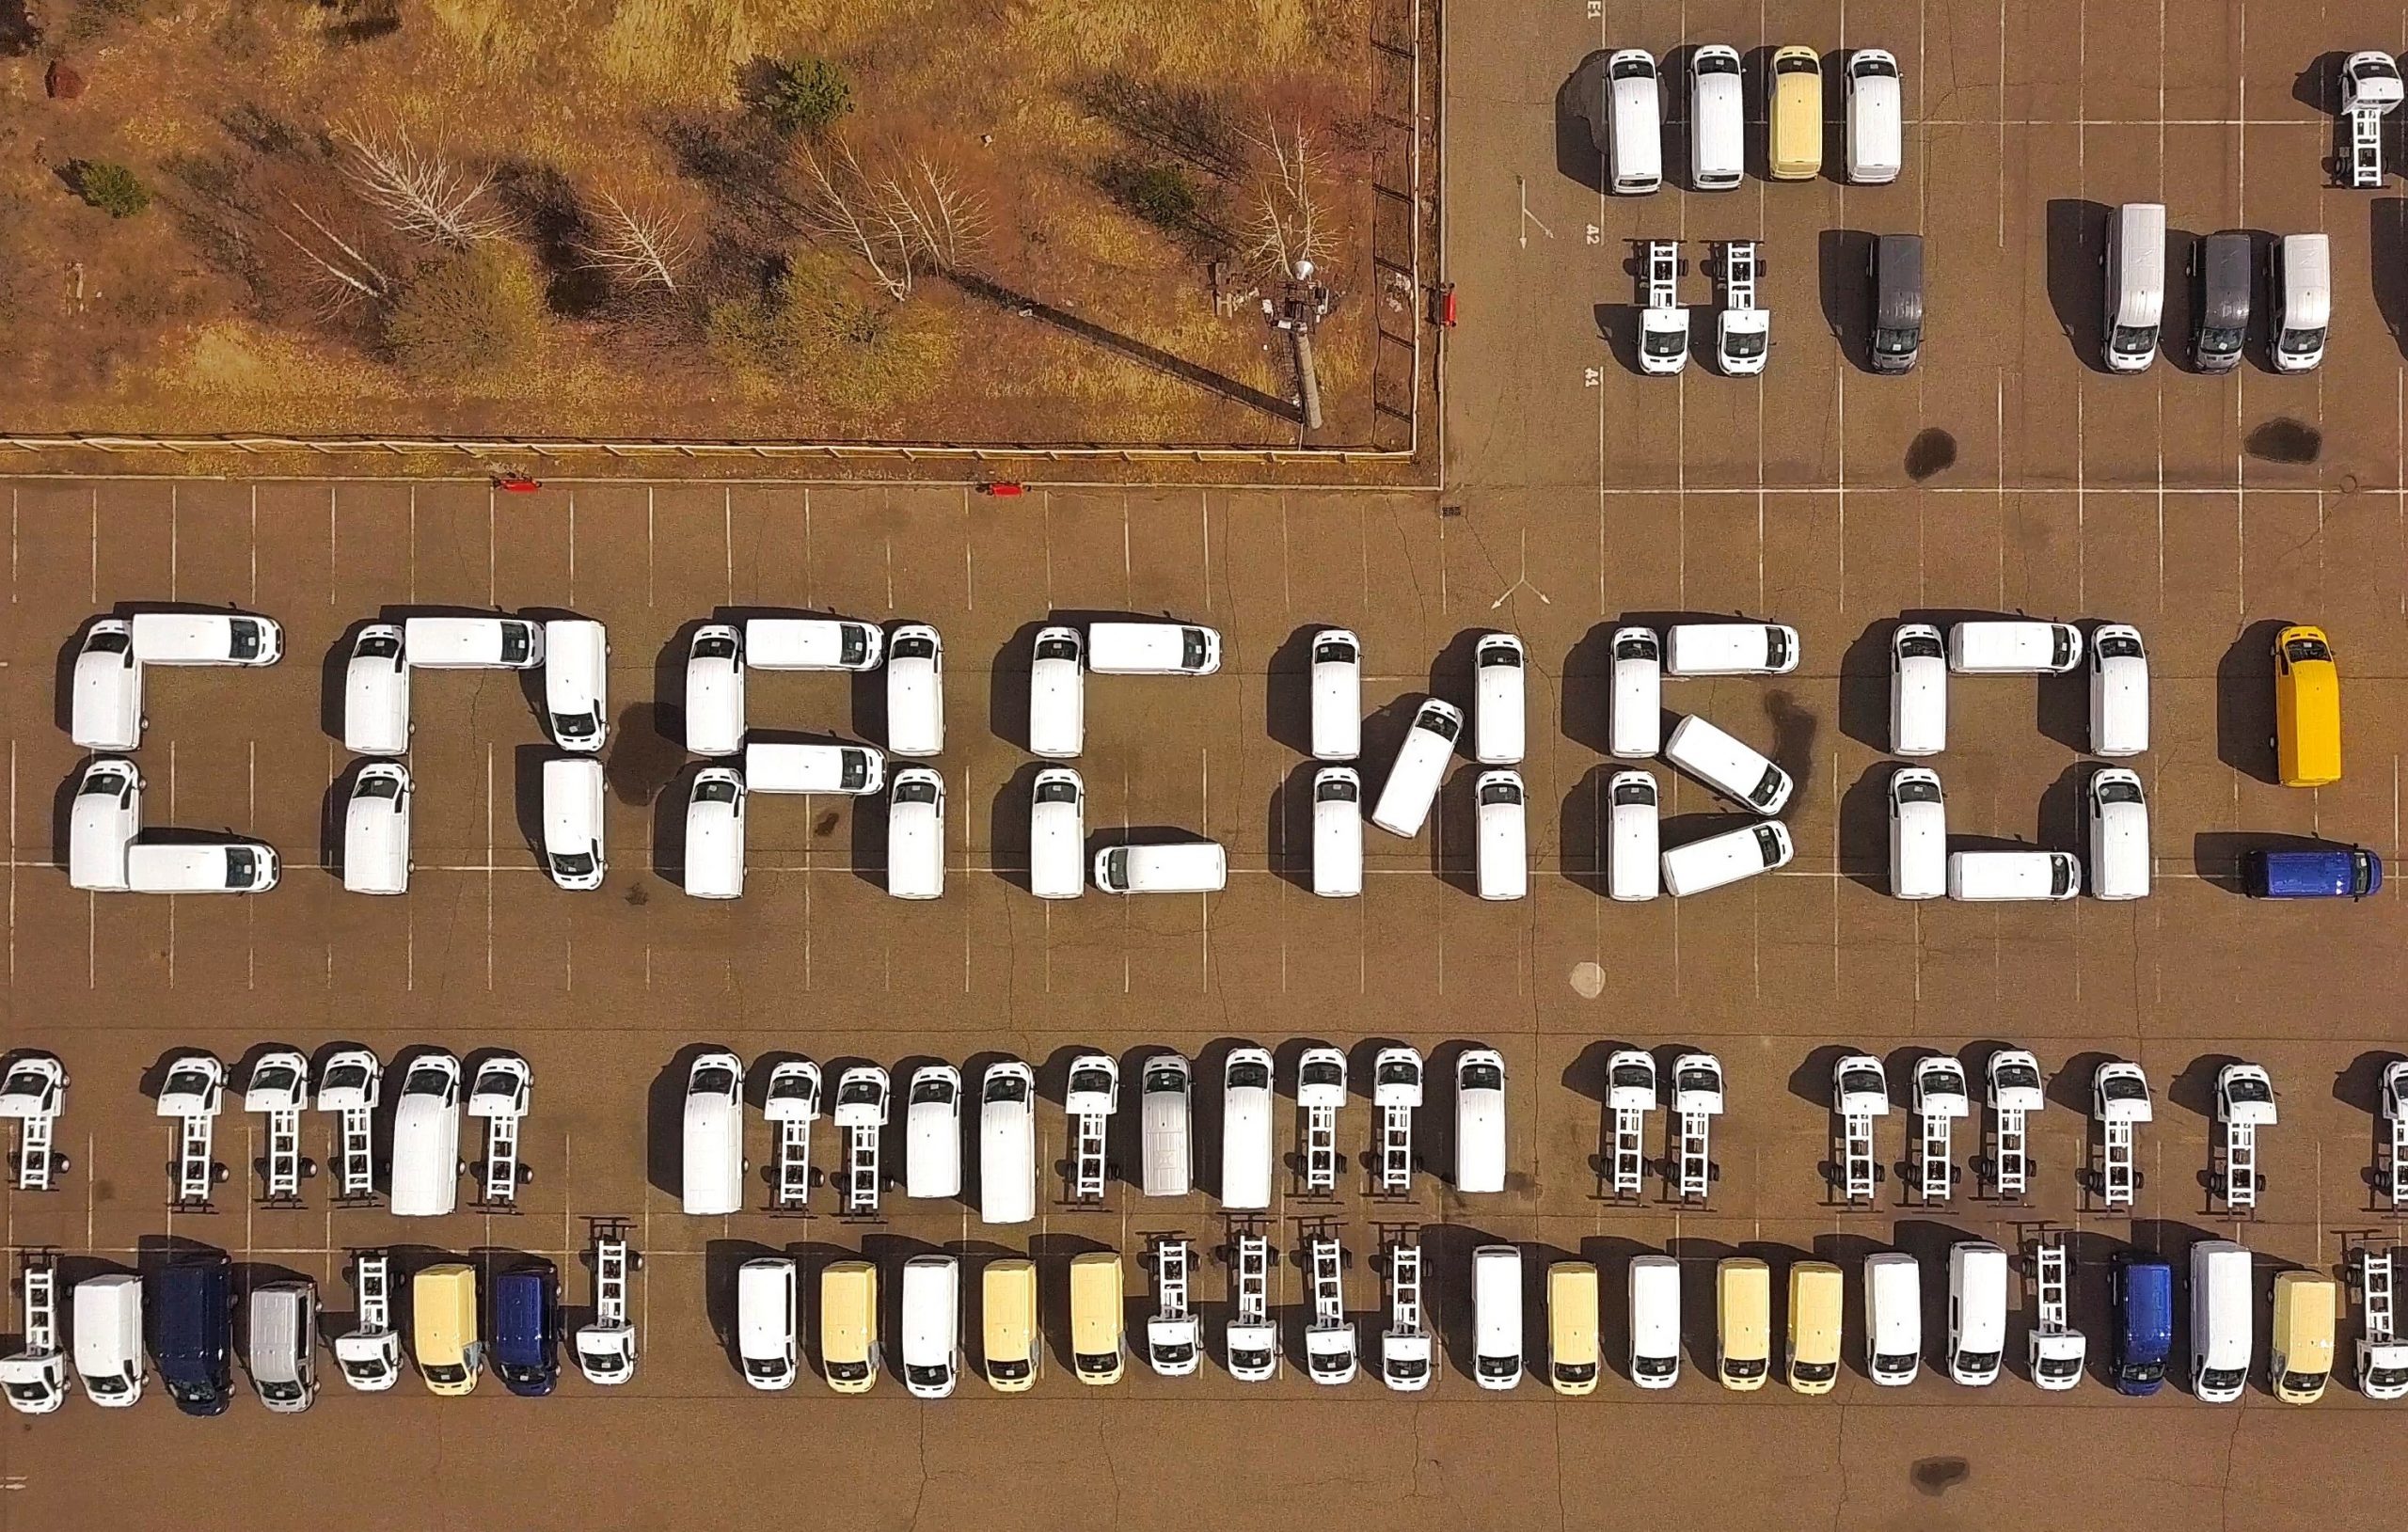 Ford Sollers организовал марафон «Спасибо», который был проведен в соцсетях